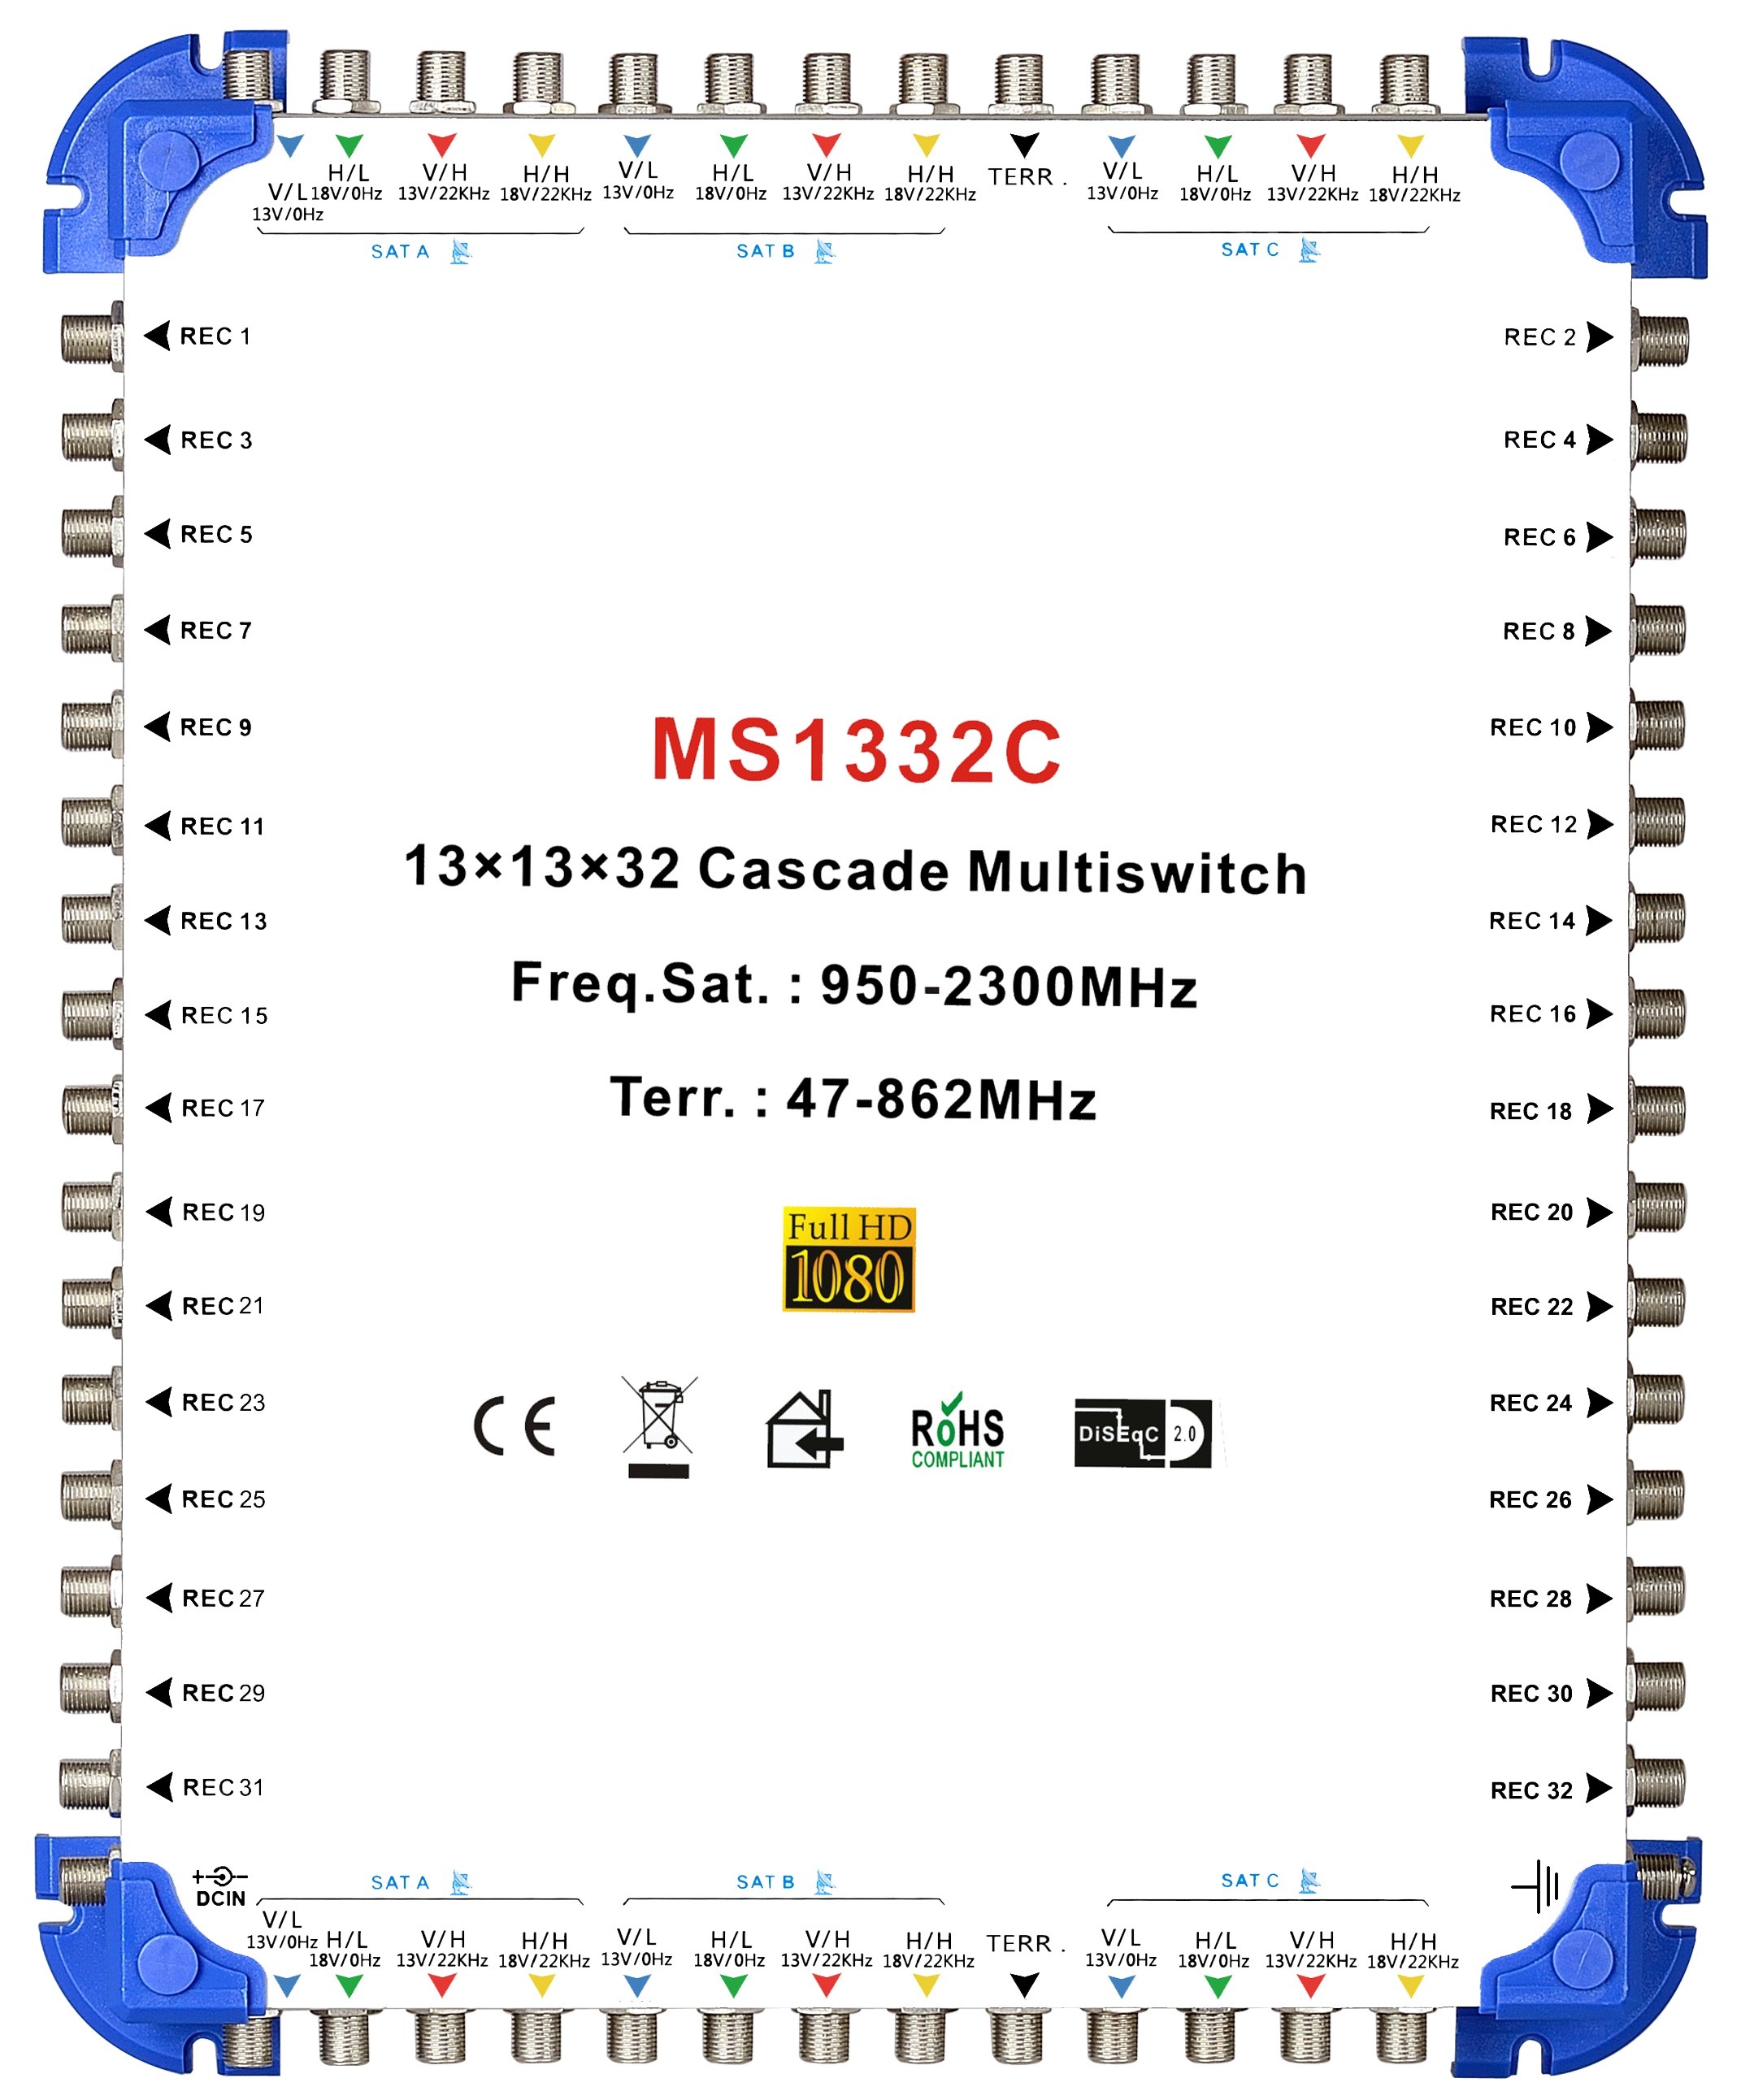 13x32 satellite multi-switch, Cascade multiswitch